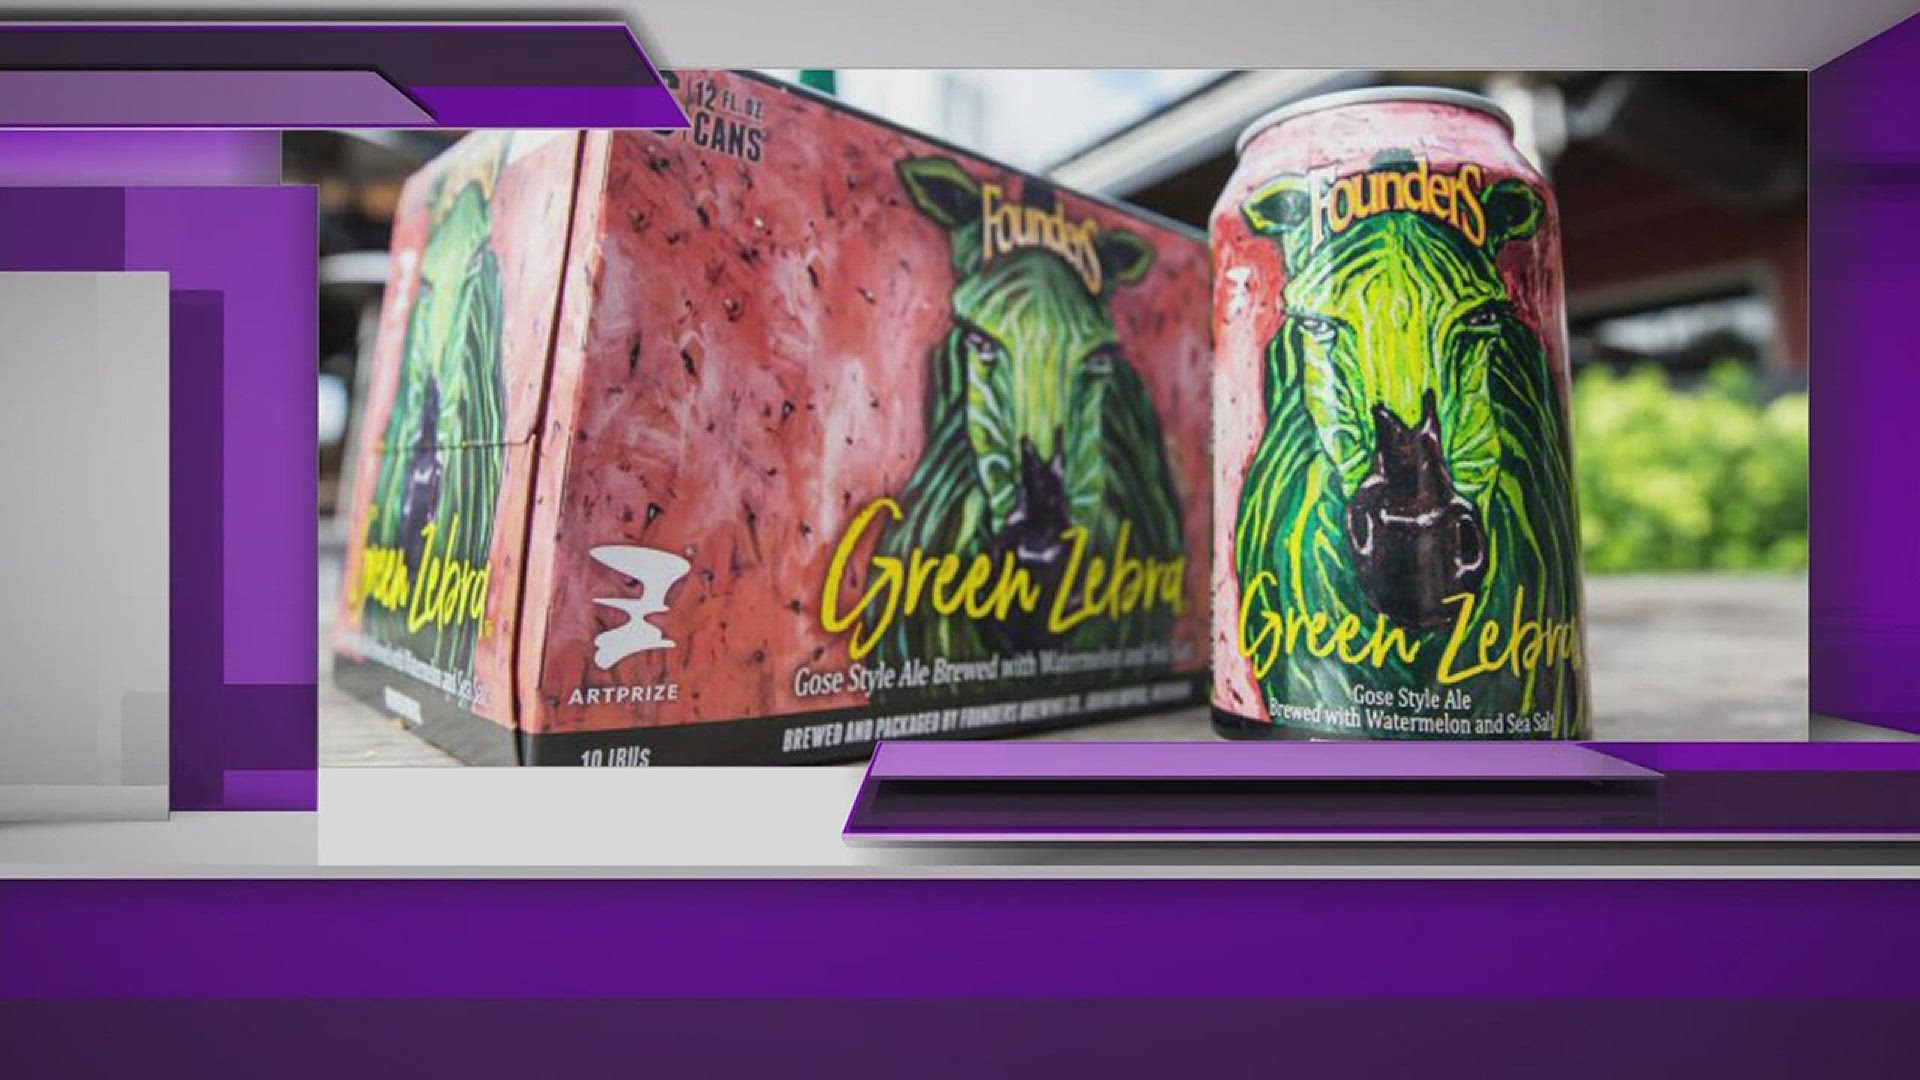 Founders beer for ArtPrize 9 is 'Green Zebra'